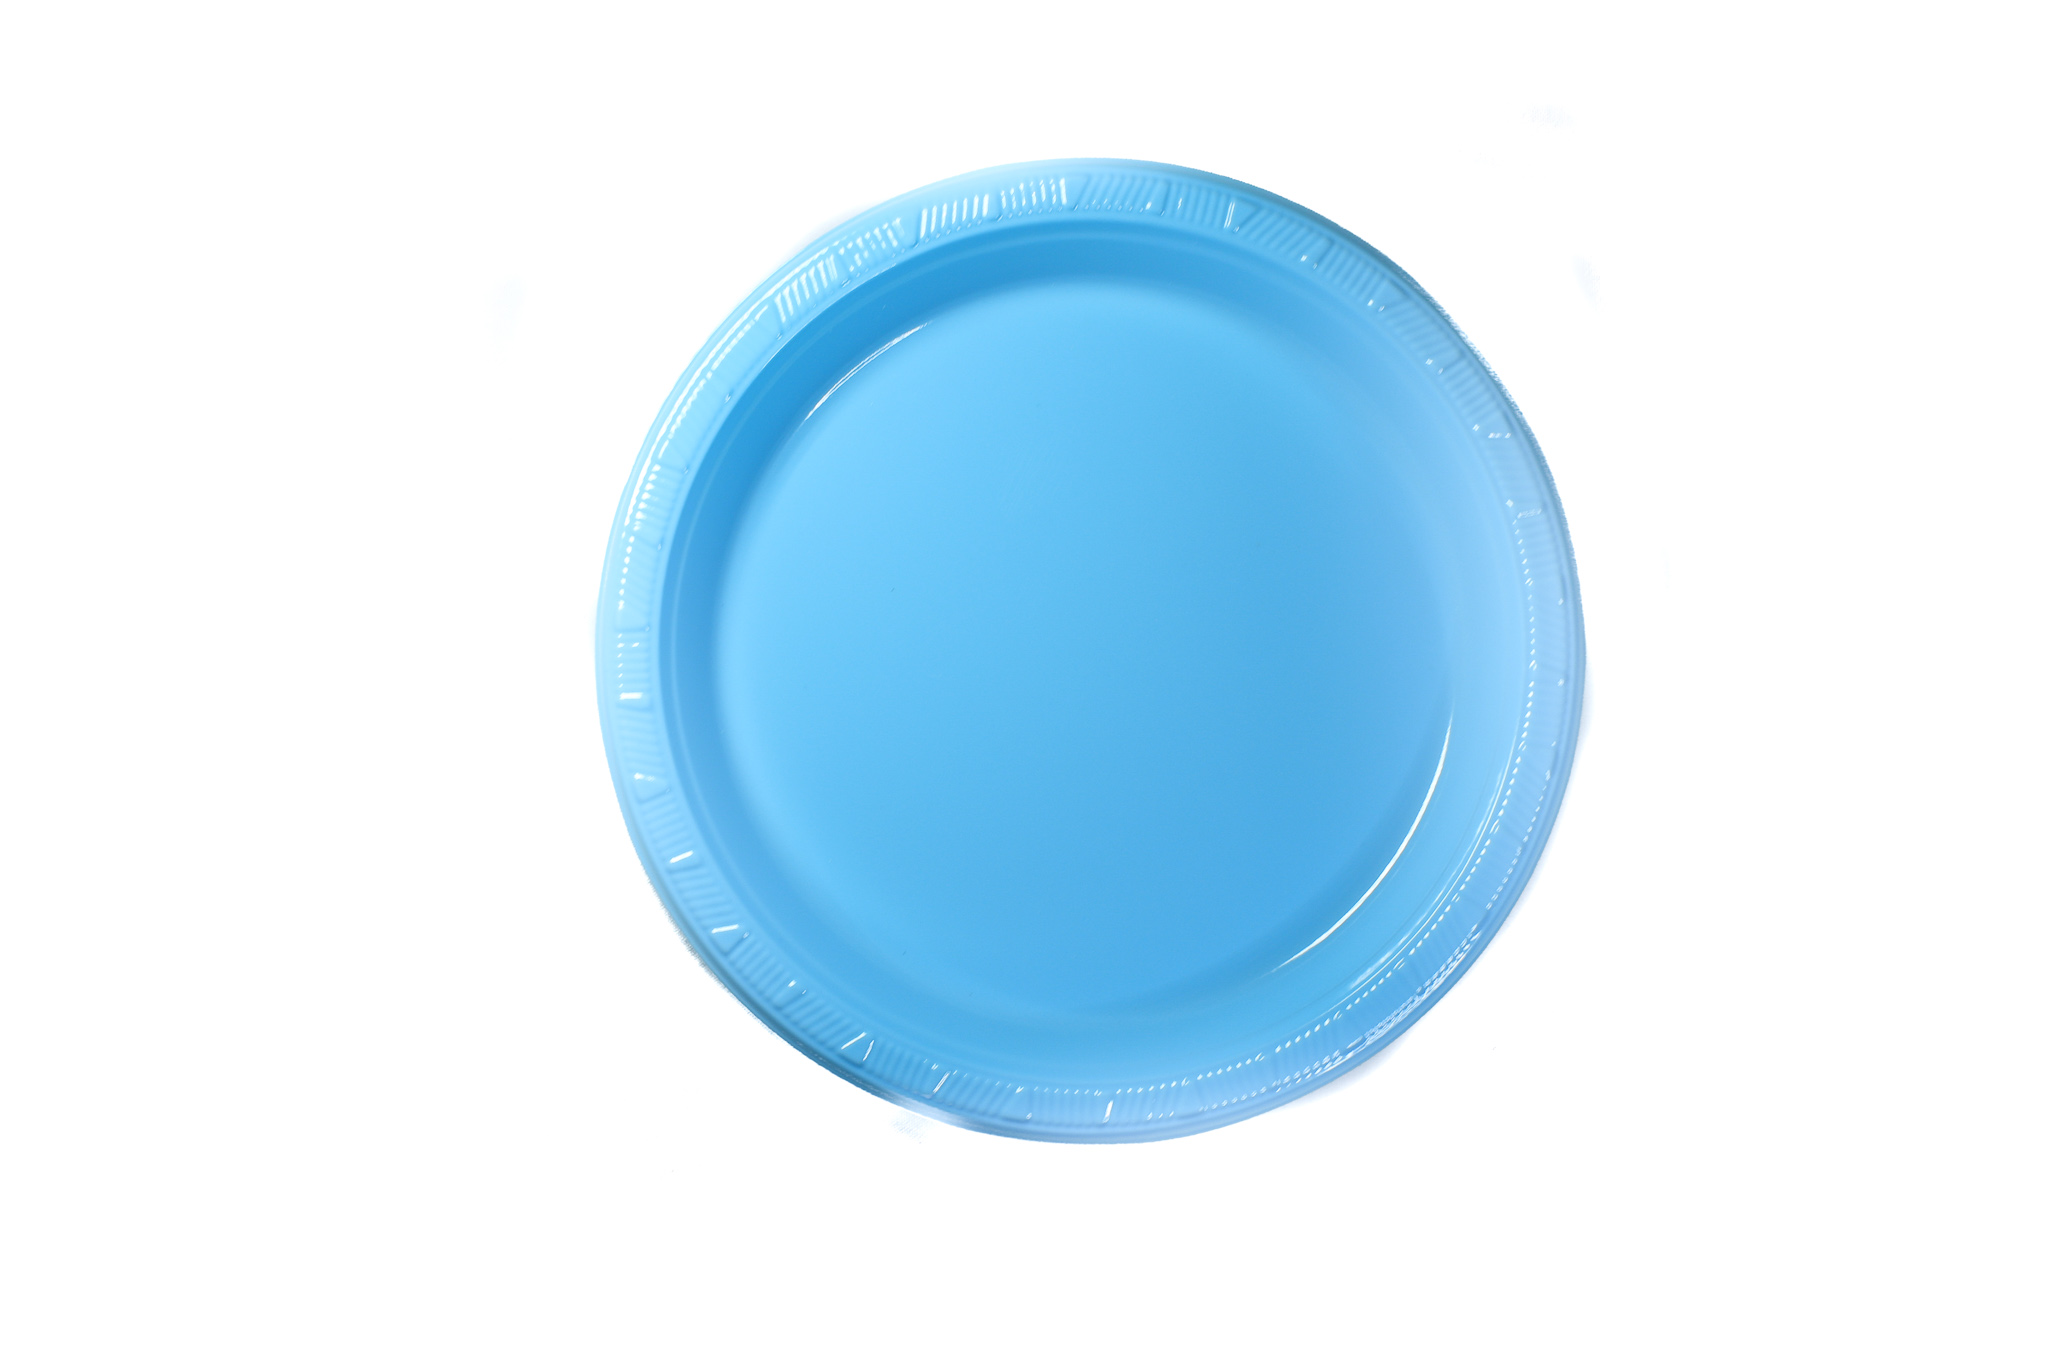 Cake Plate (Plastic) 7in 12ct-Light Blue 8-5 G